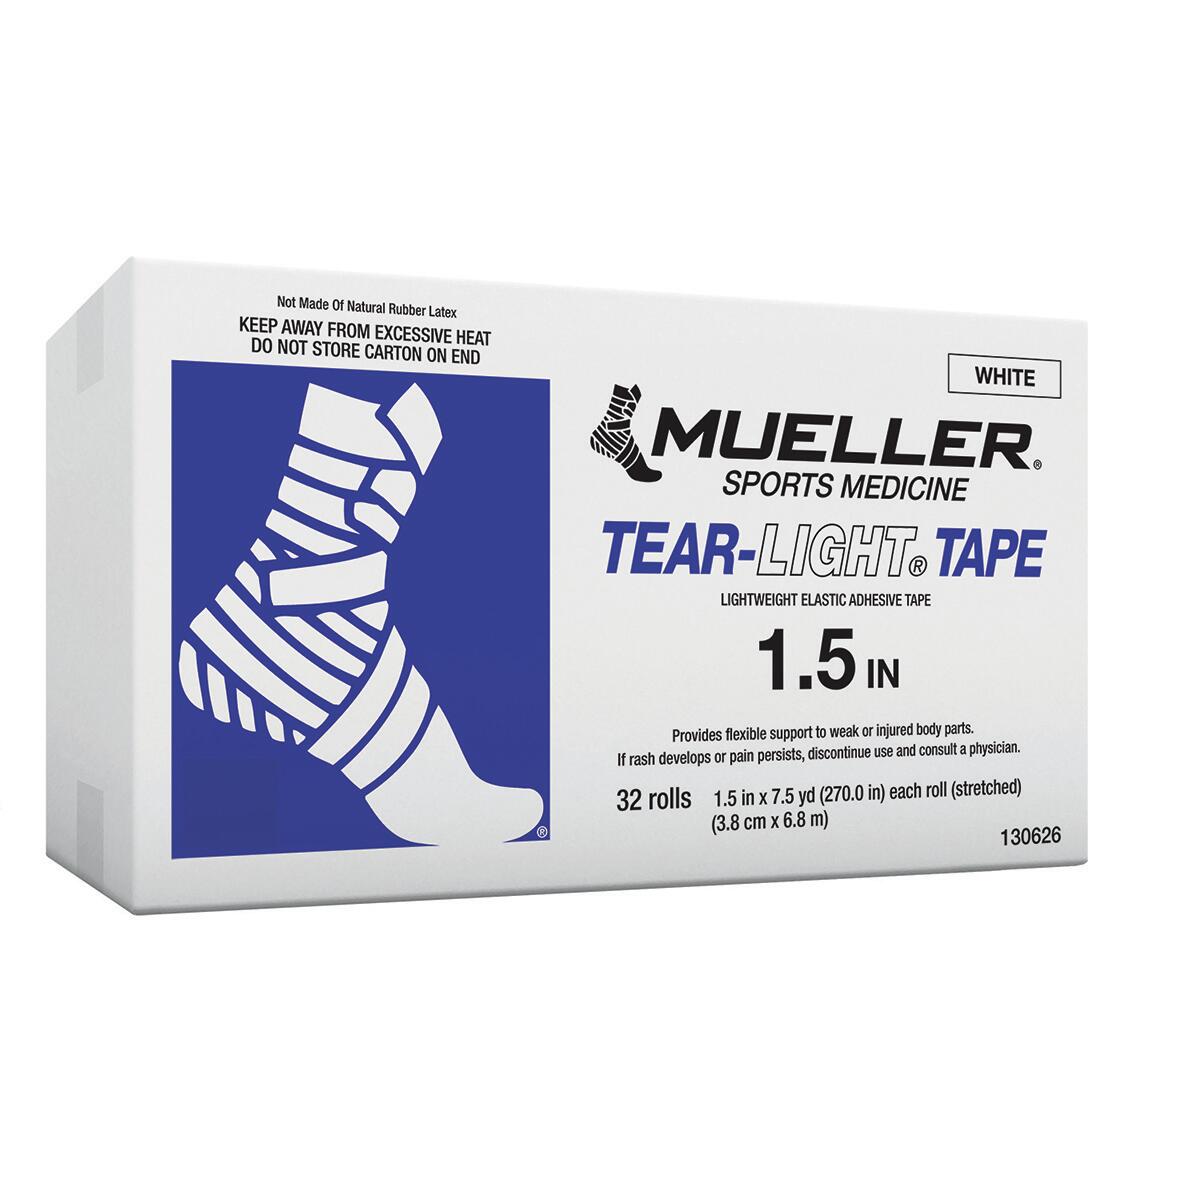 MUELLER Mueller Muscle Support Tear-Light Tape White 3.8cm x 6.9m - x32